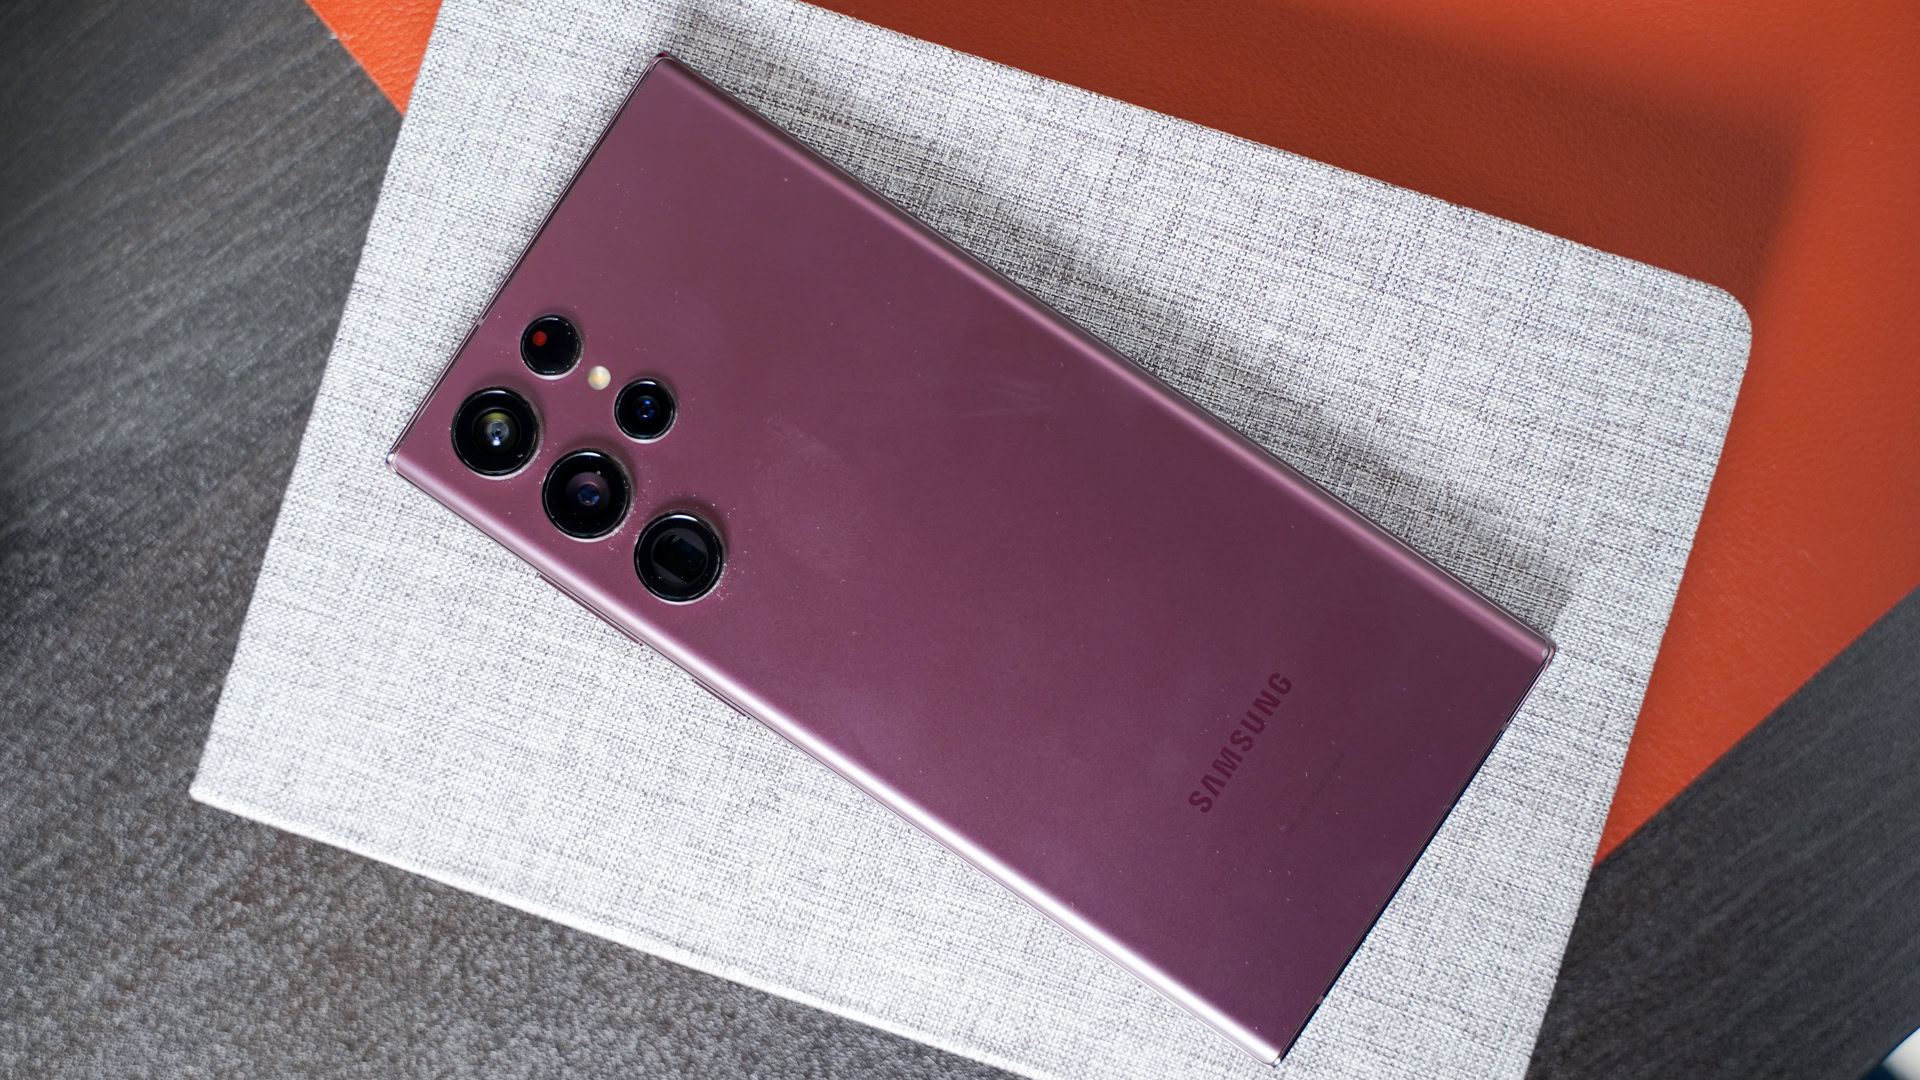 Samsung Galaxy S22 Ultra in lavendar on book